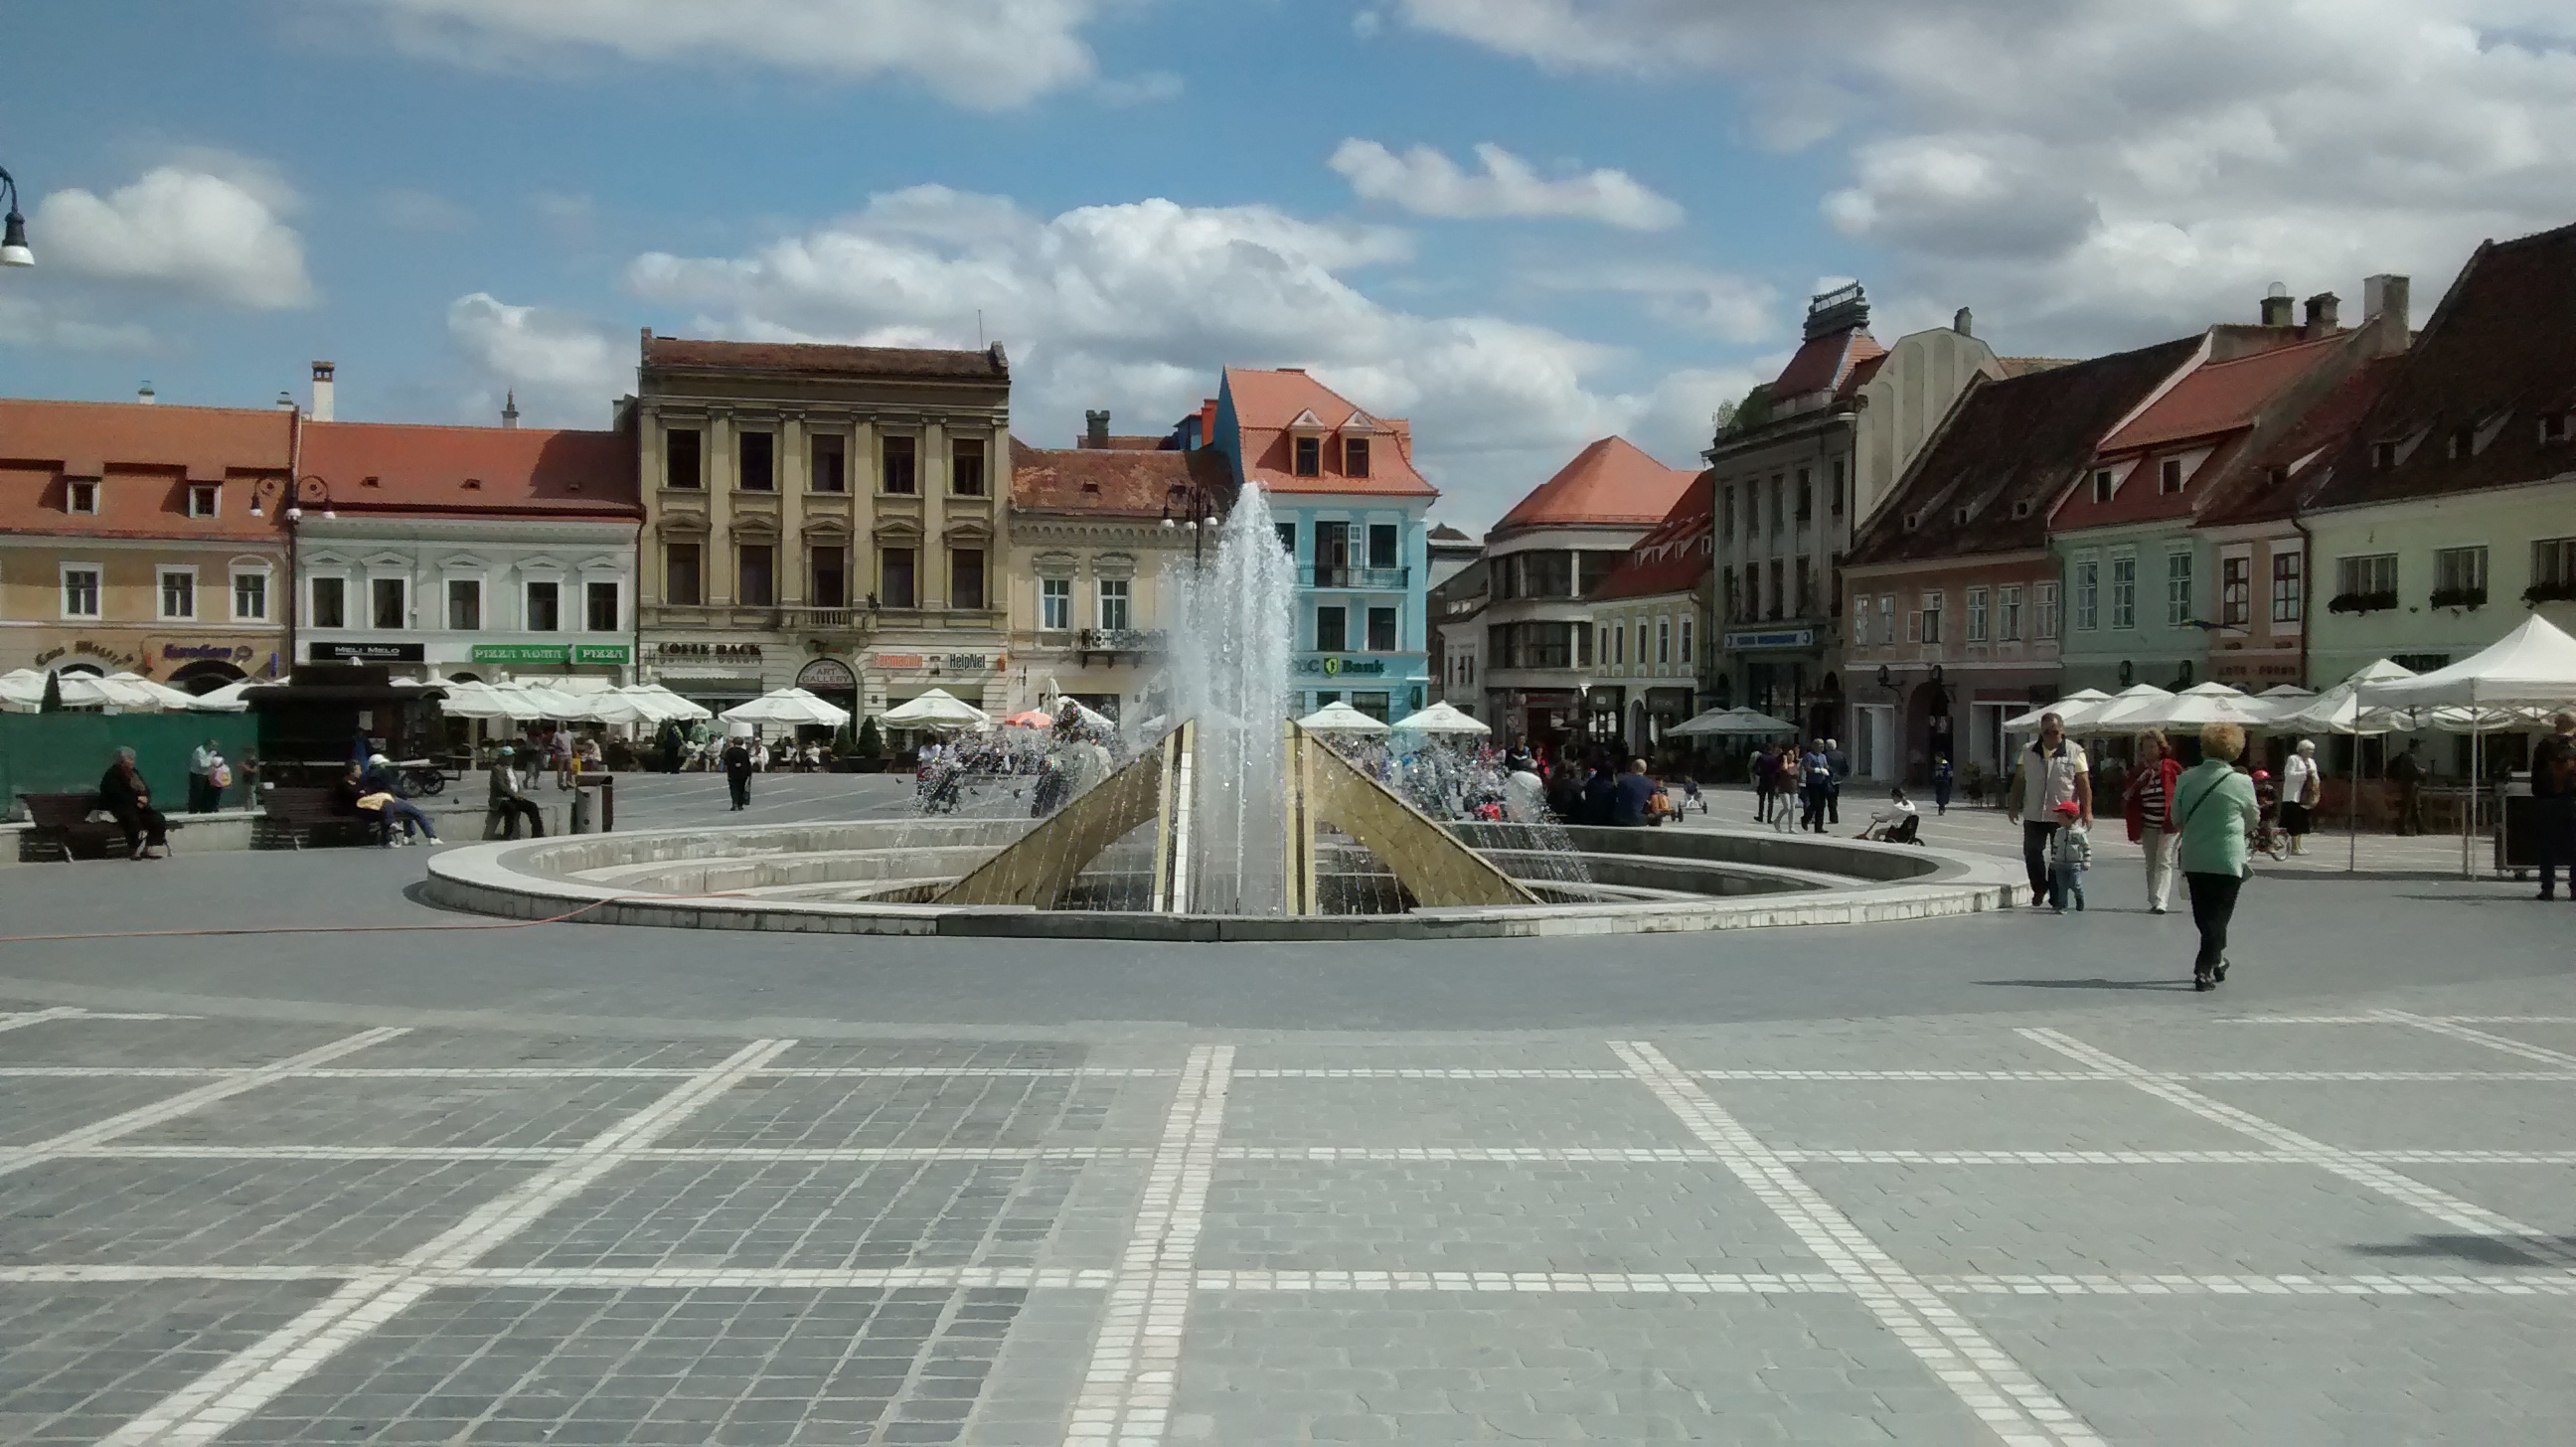 The town square in Brasov